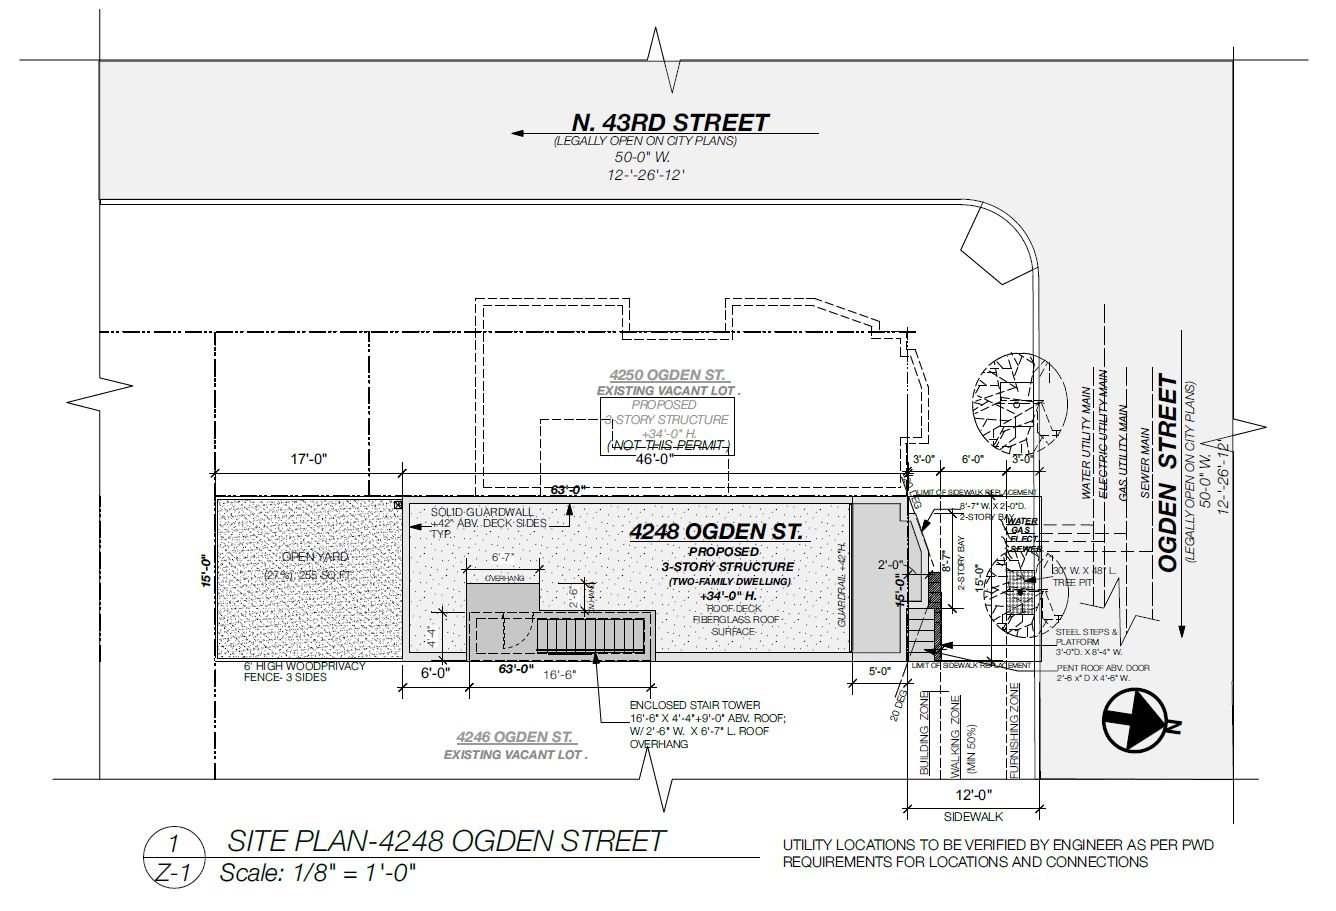 4248 Ogden Street. Site plan. Credit: JOs. Serratore Co. Architect Inc. via the City of Philadelphia Department of Planning and Development